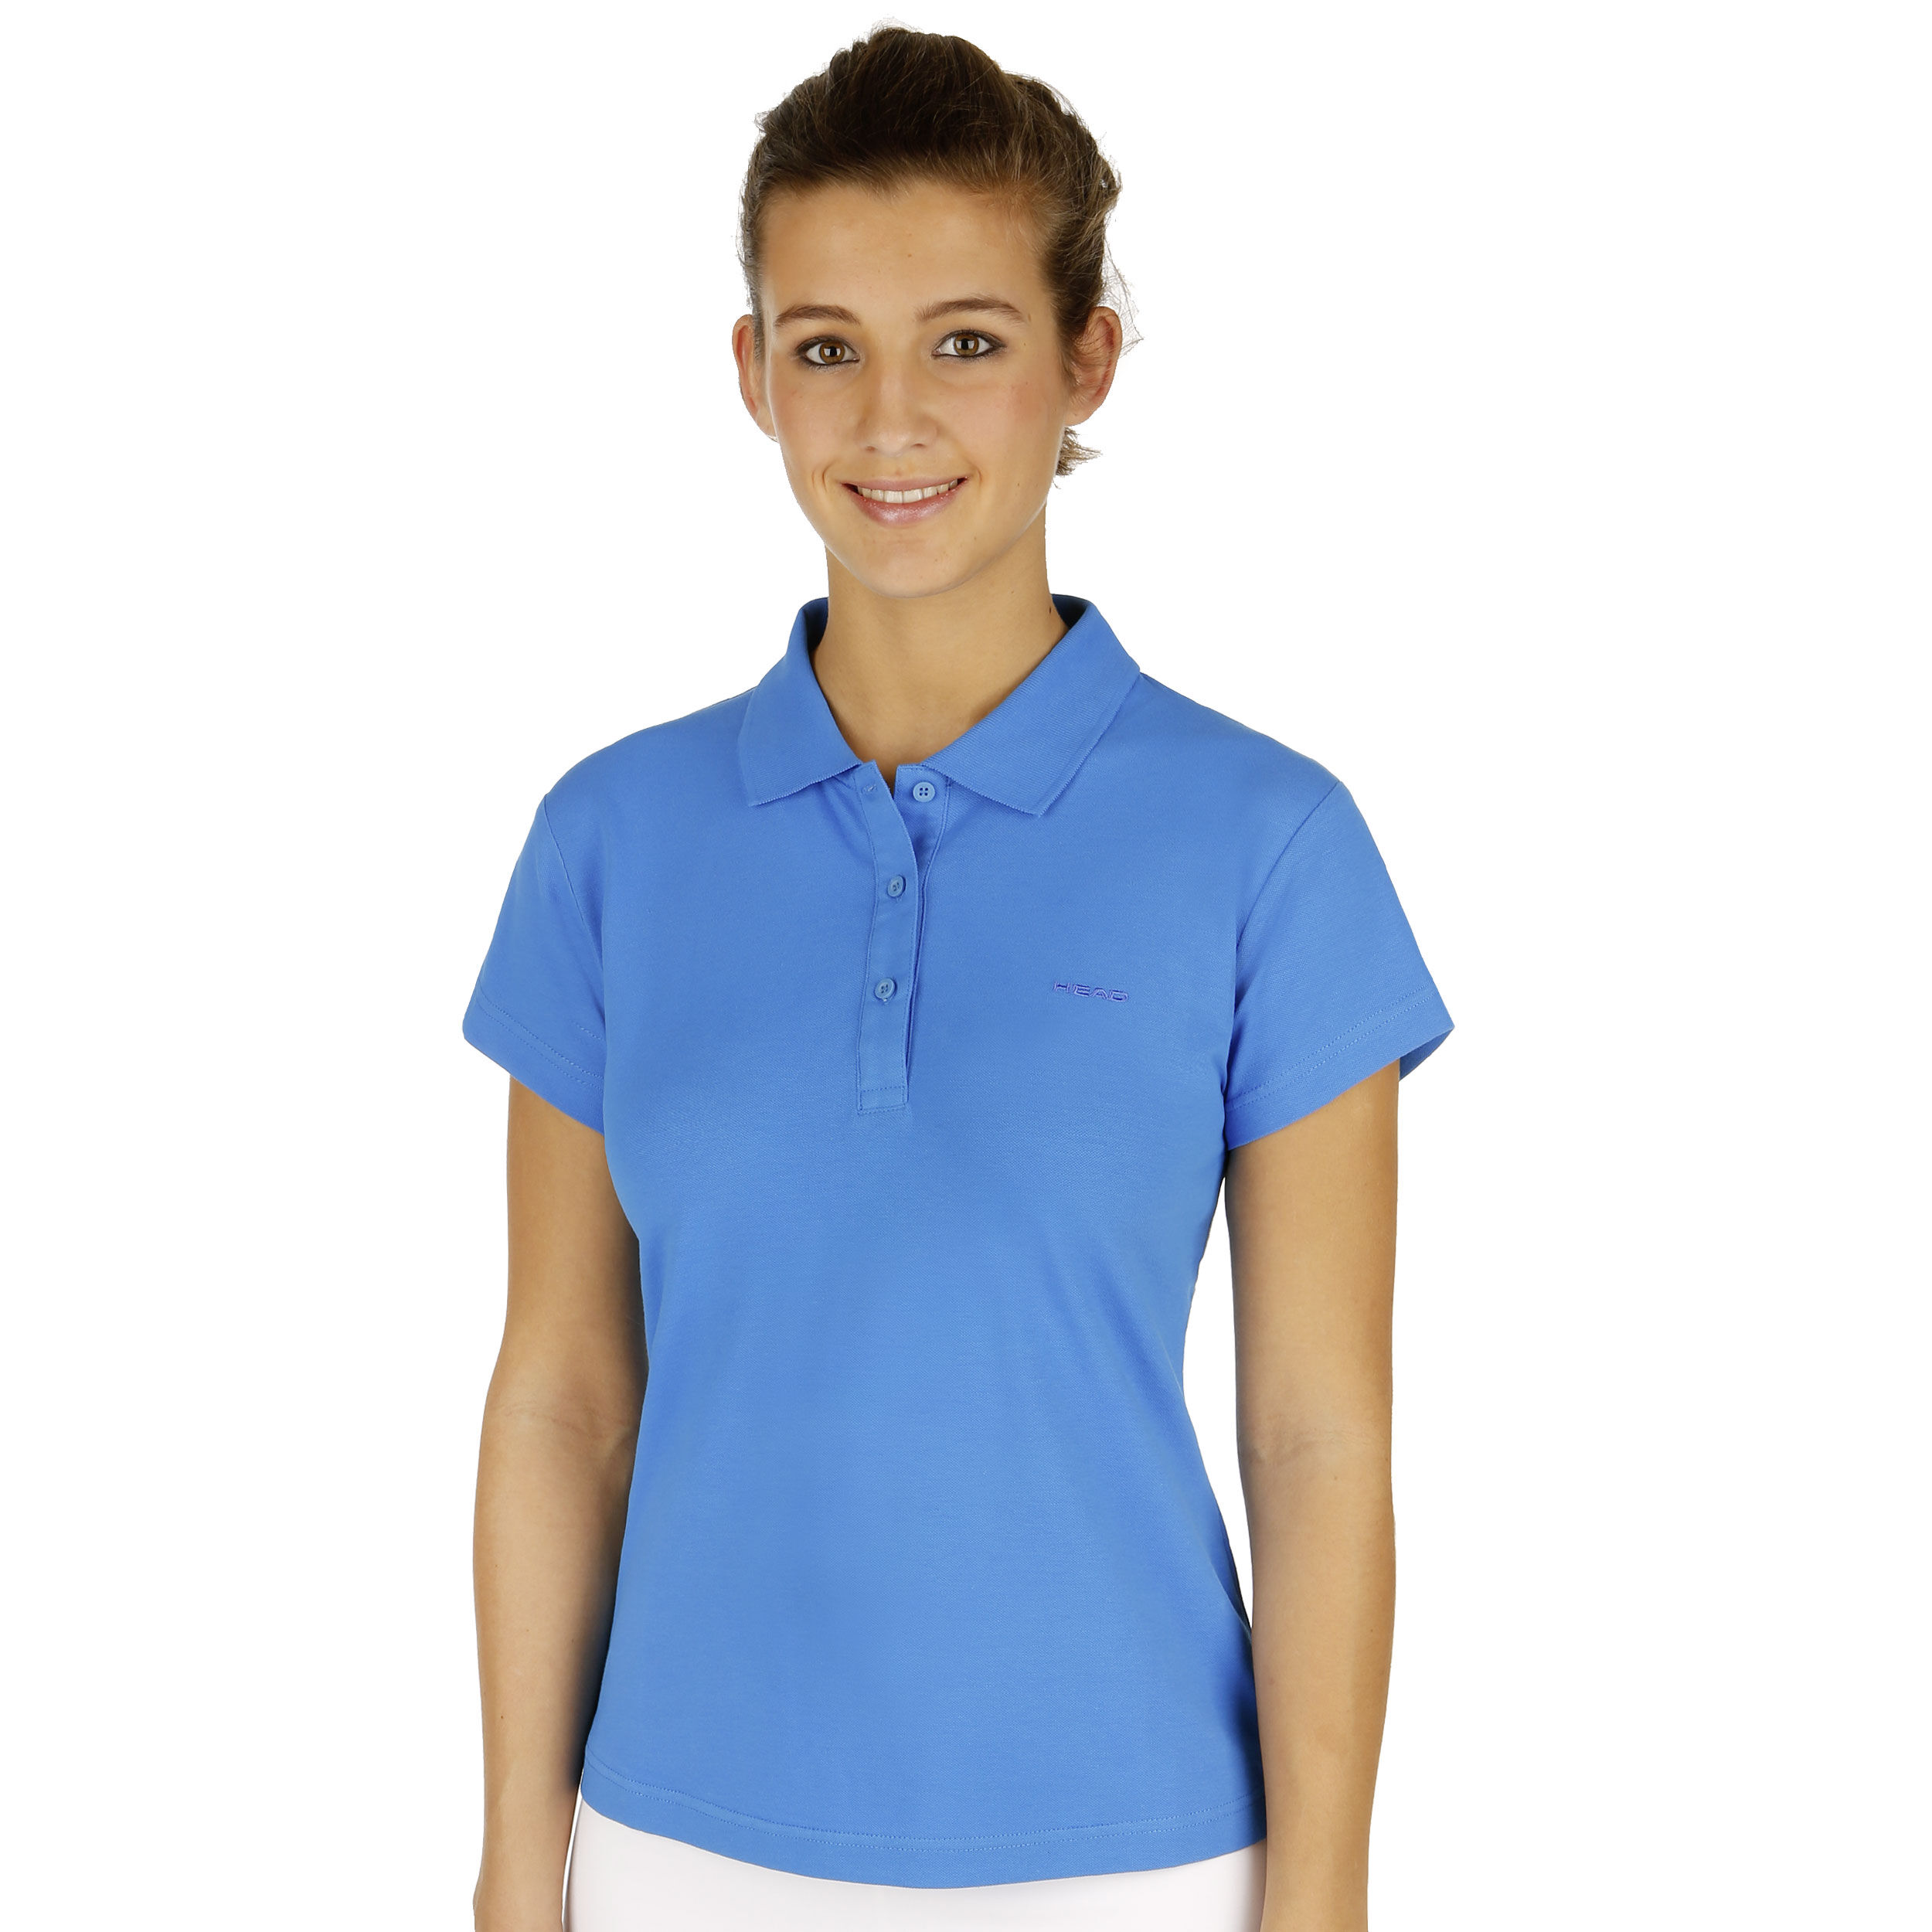 HEAD Mary Damen Freizeit Tennis Mode Polo-Shirt 814303 schwarz blau rot neu